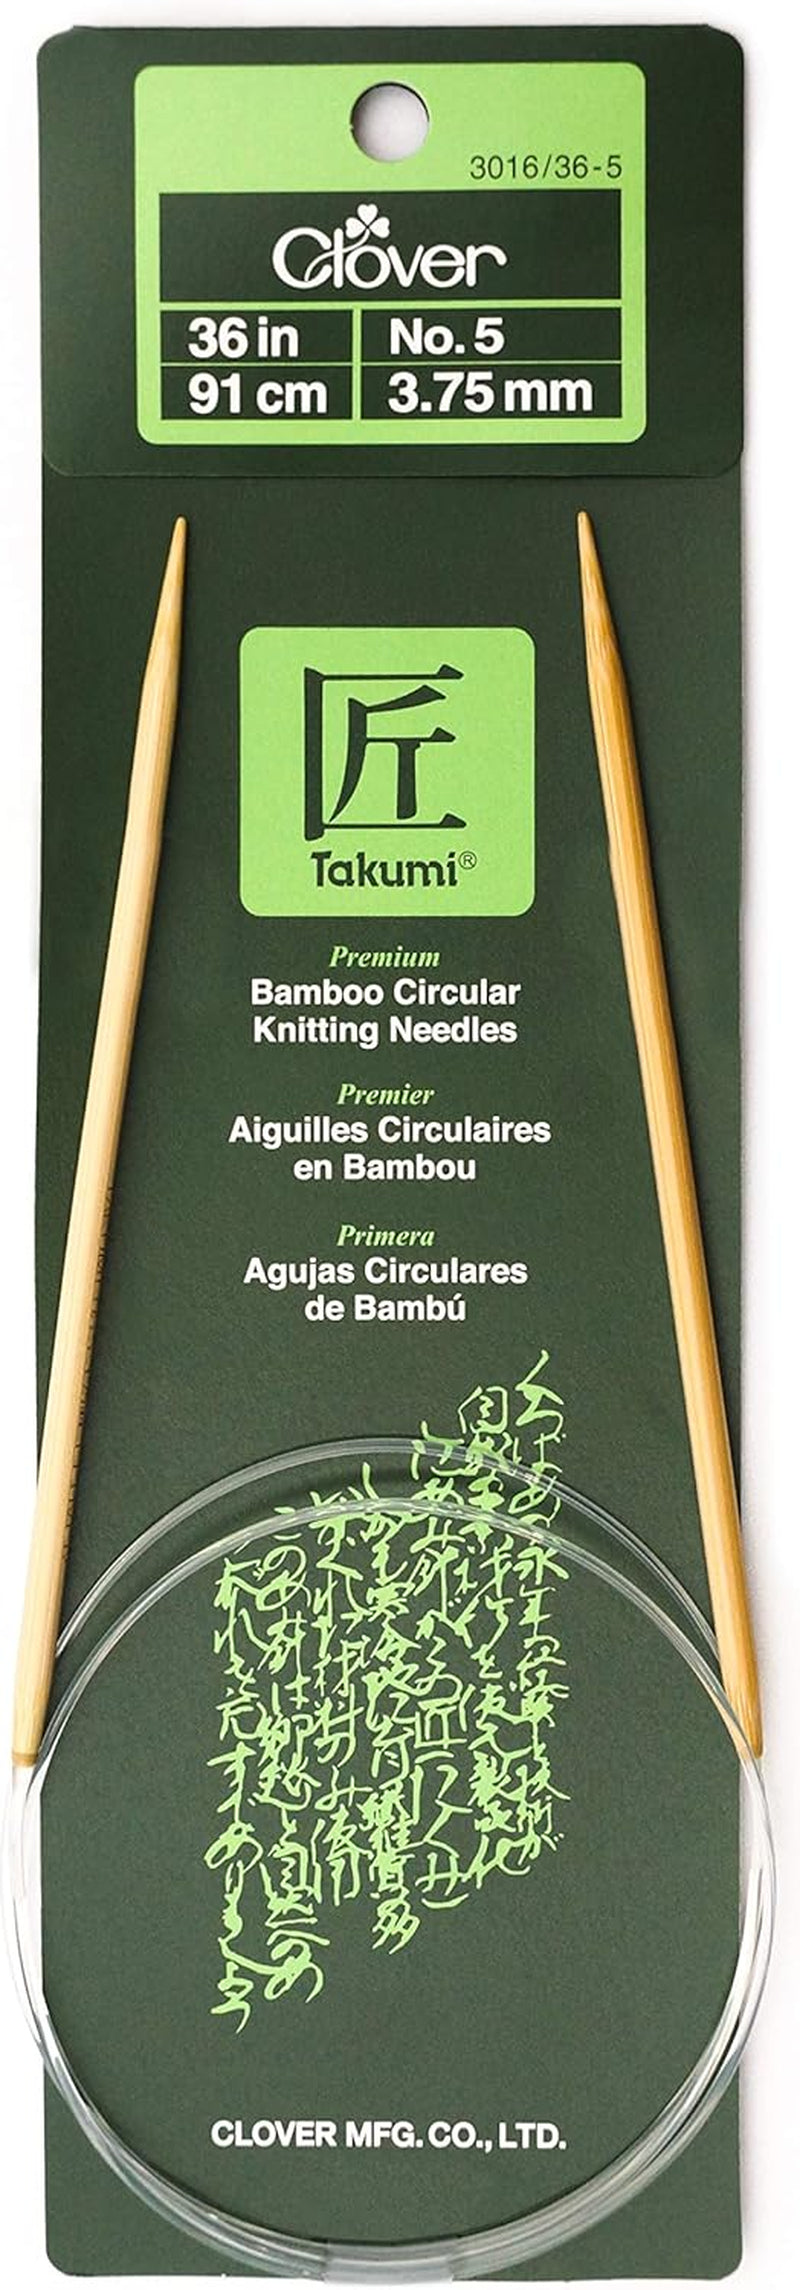 3016/36-05 Takumi Bamboo Circular 36-Inch Knitting Needles, Size 5